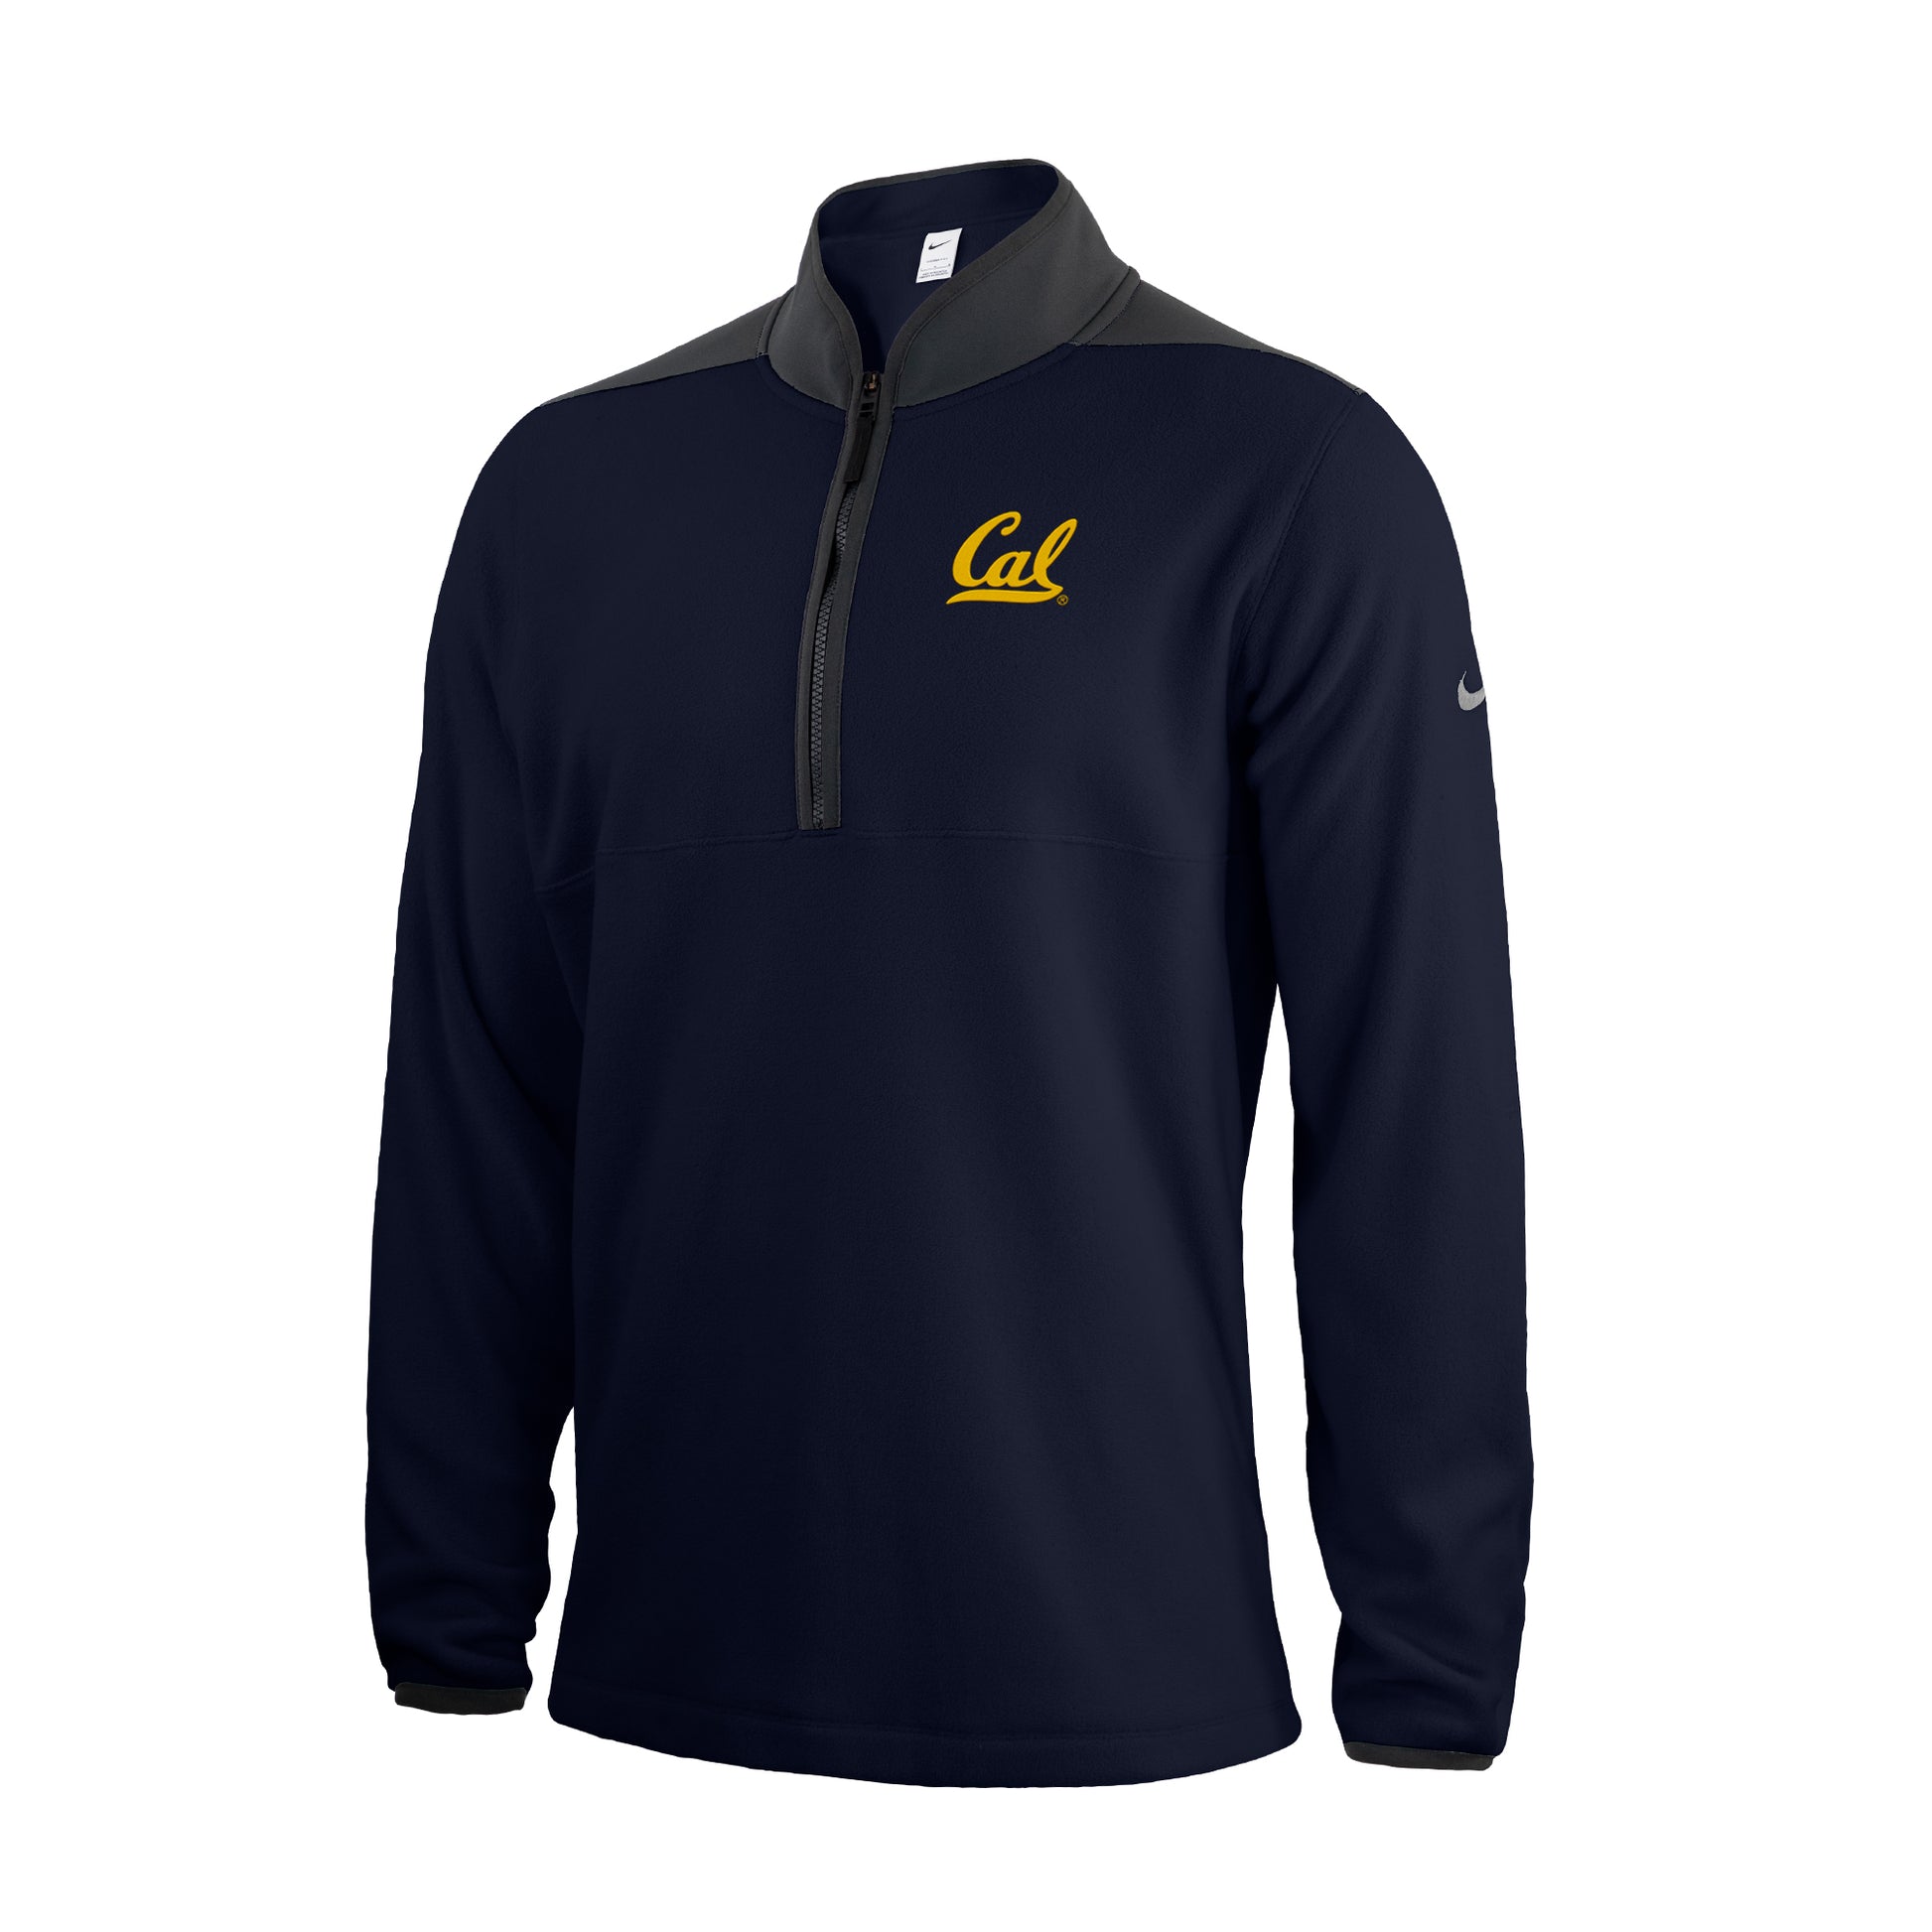 U.C. Berkeley Cal embroidered Therma Fit Victory half zip -Navy-Shop College Wear